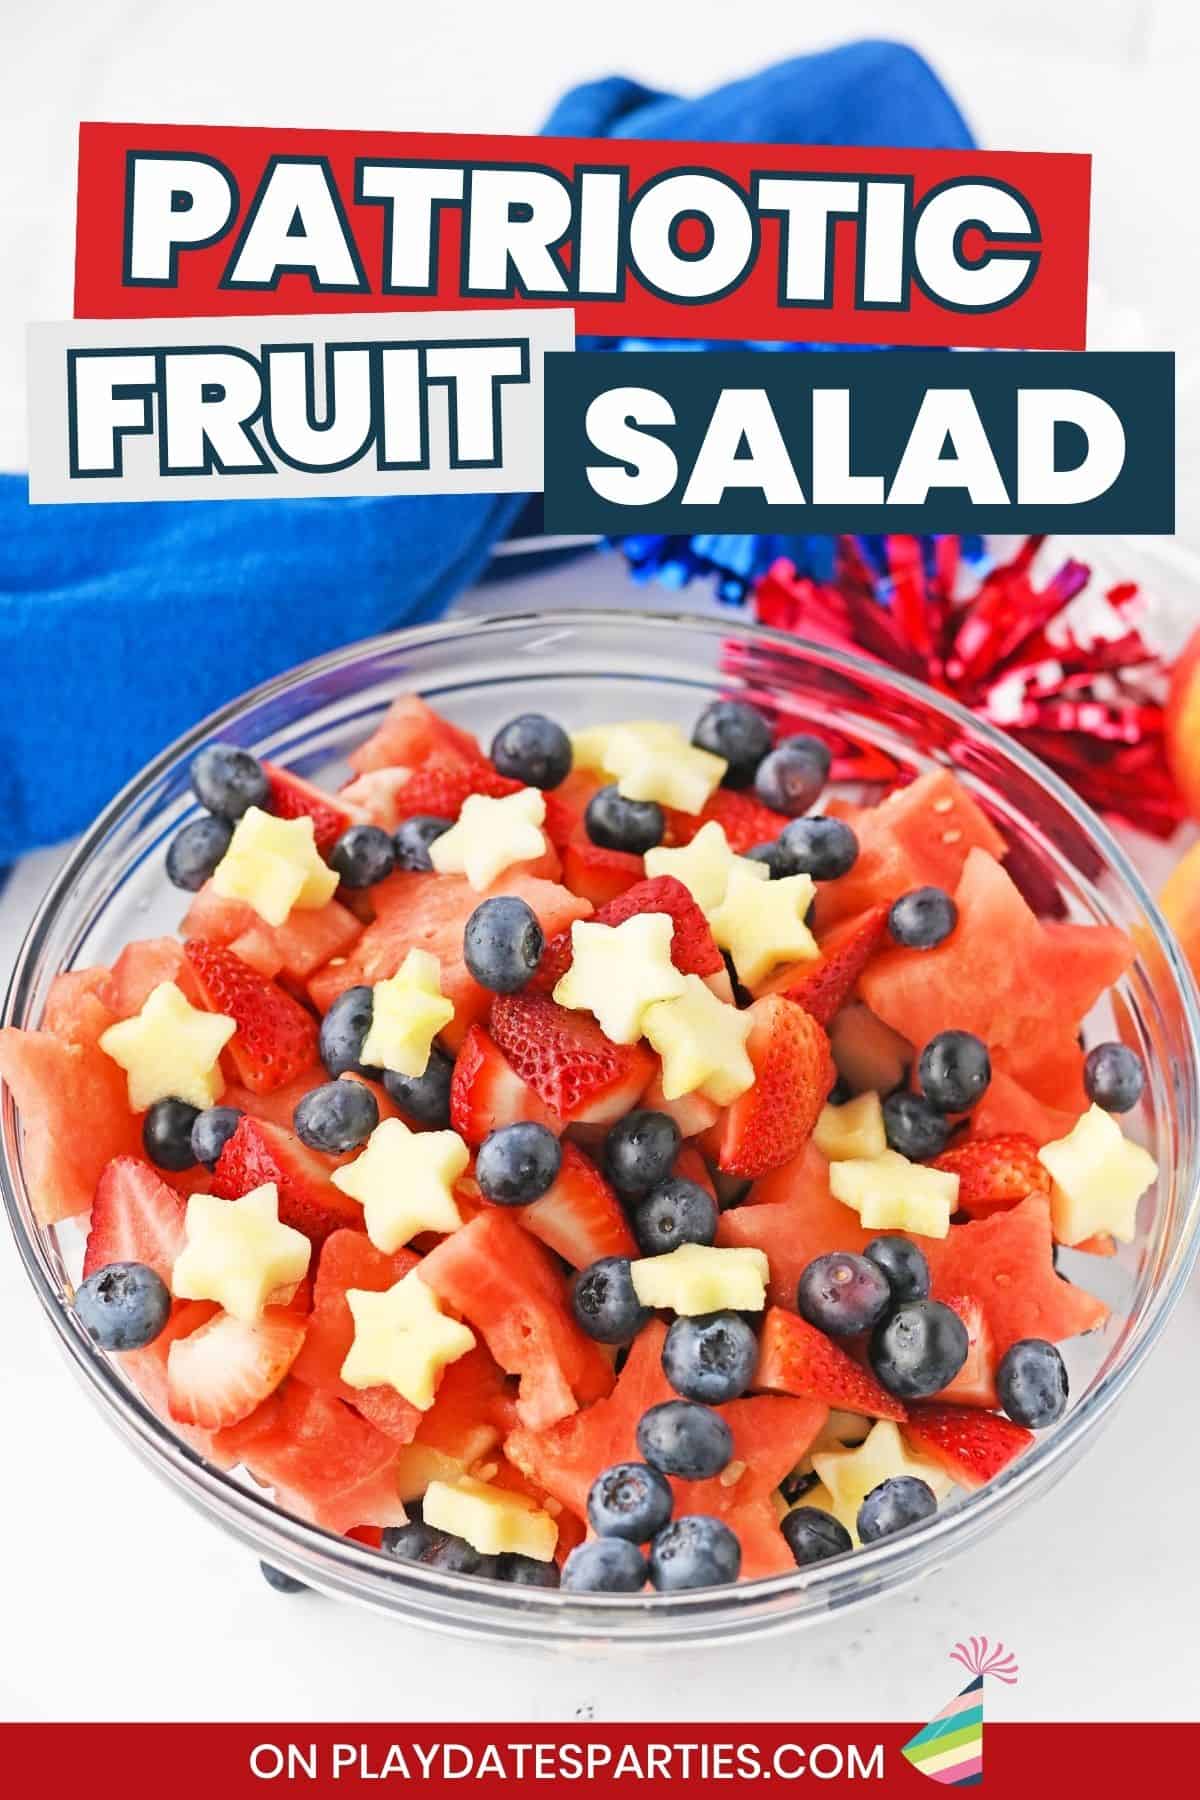 Patriotic fruit salad Pin Image.